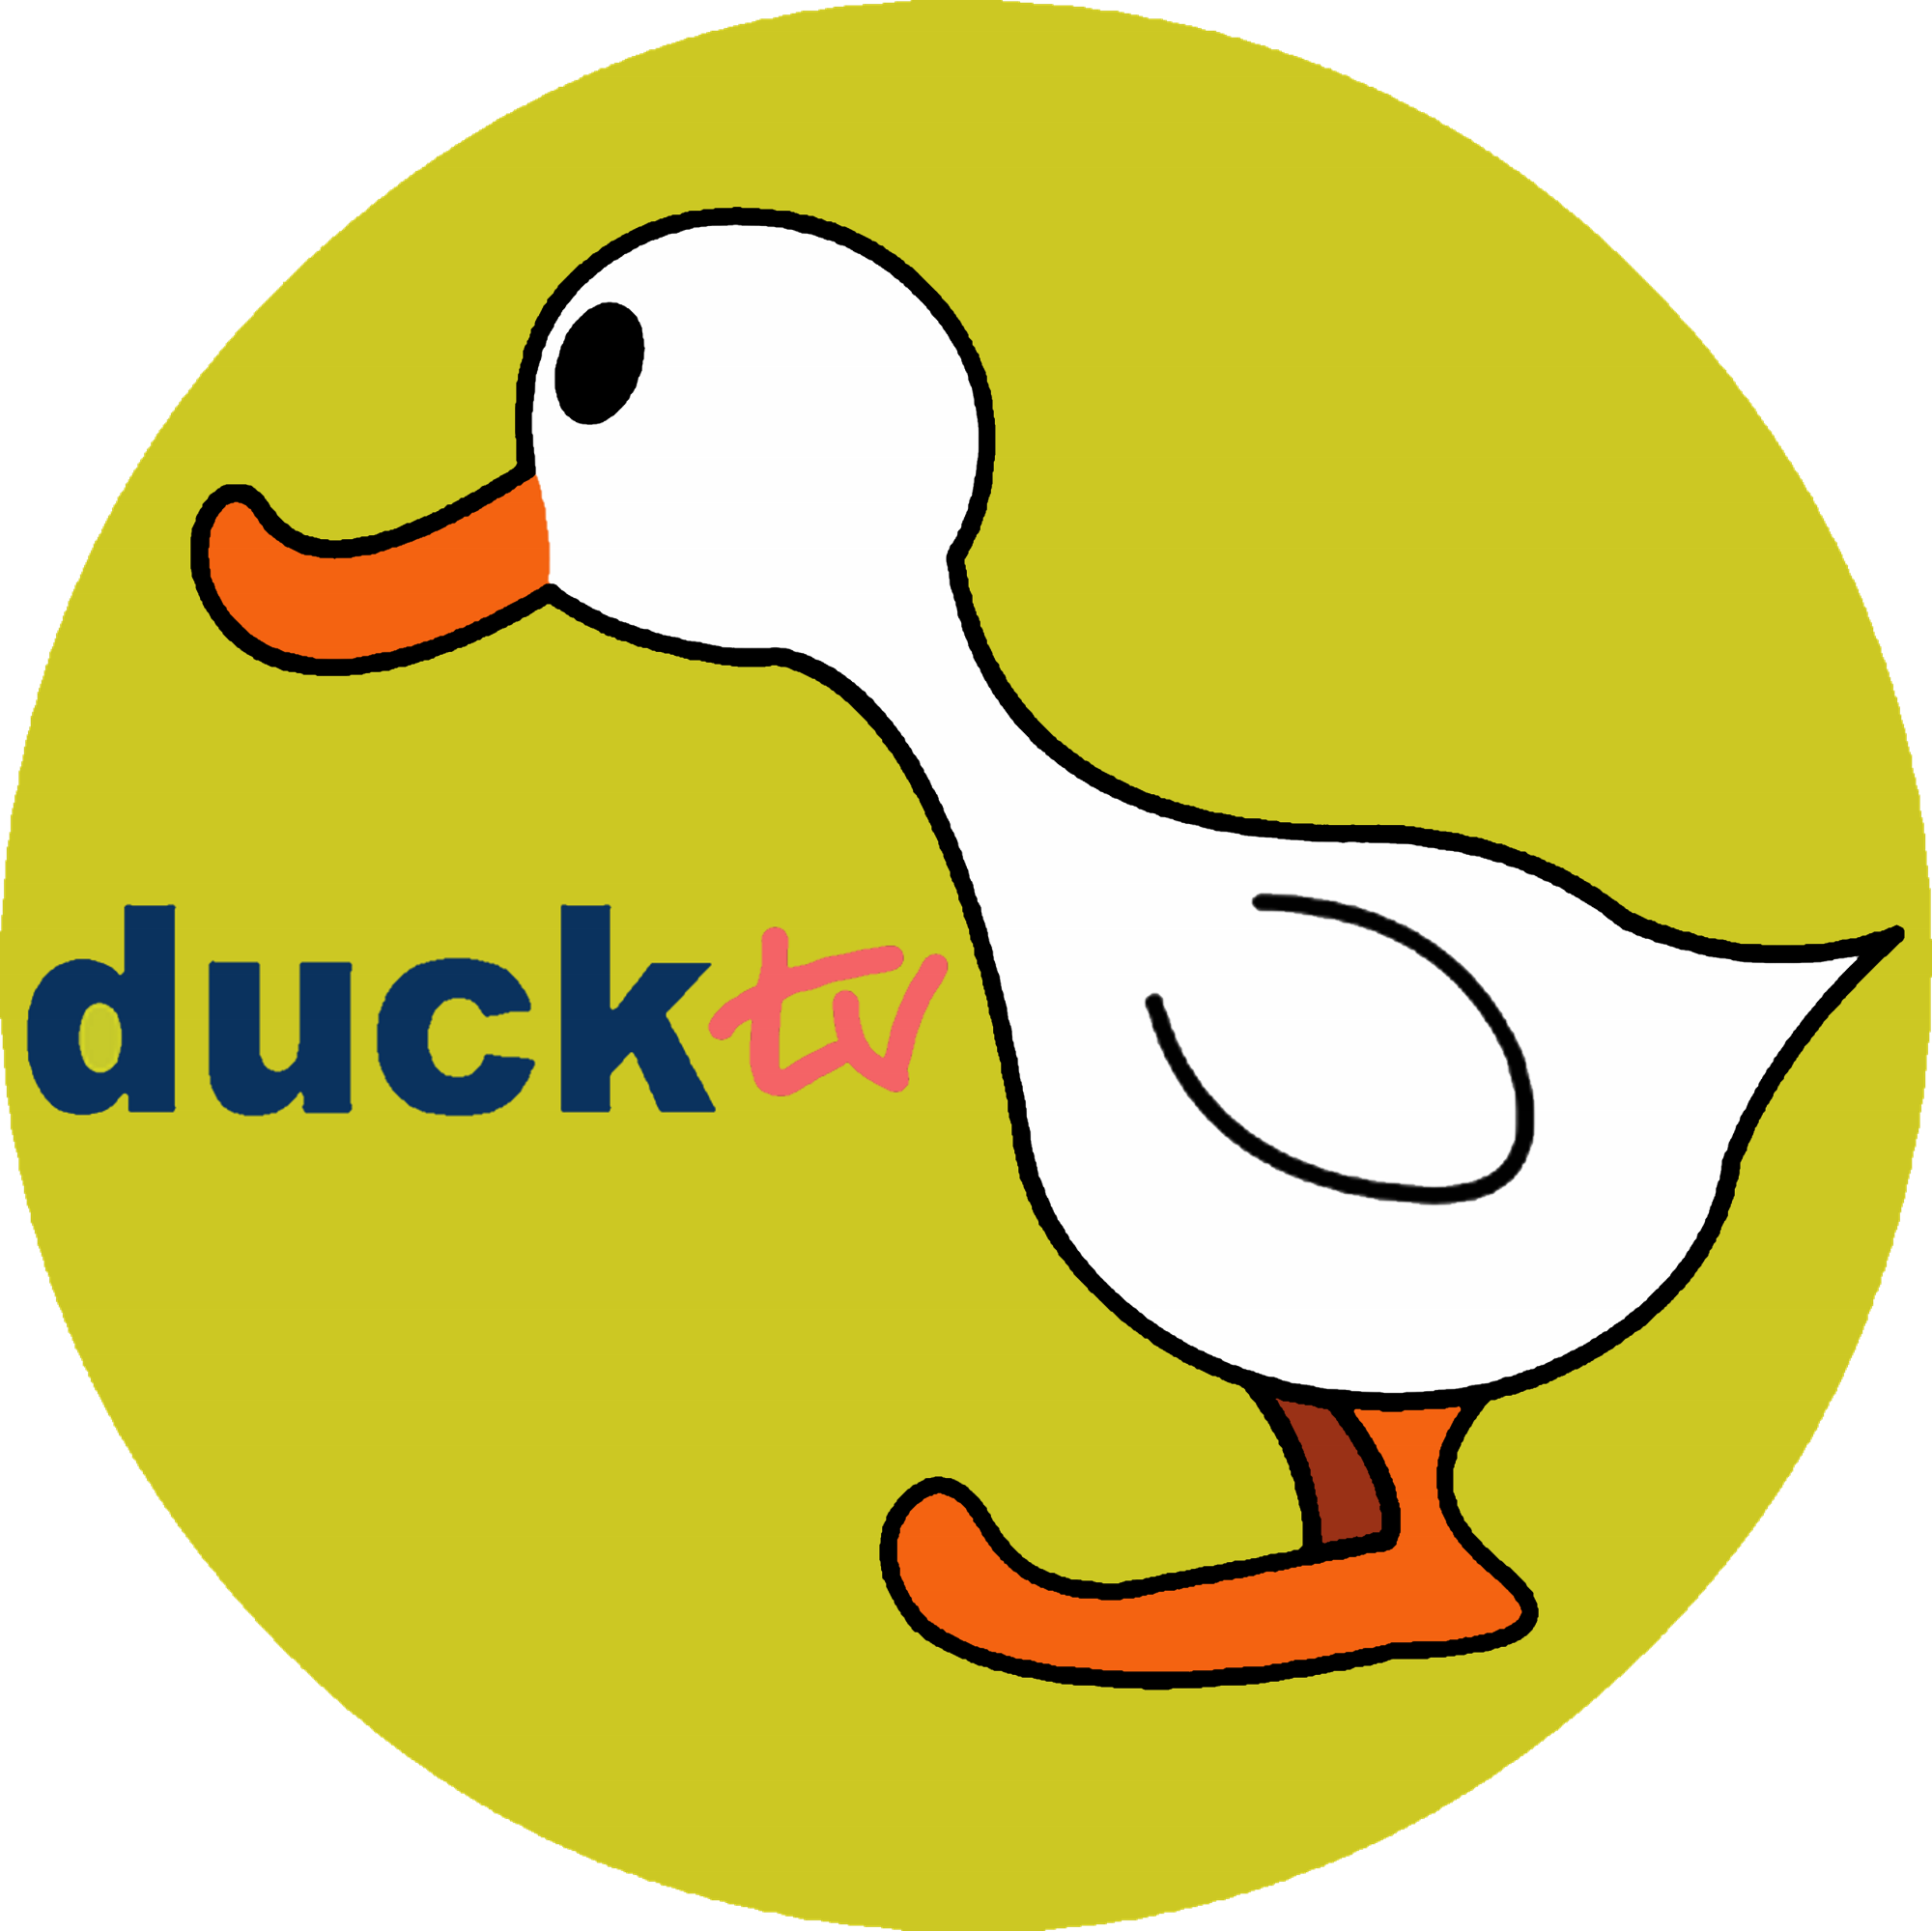 Image duck tv n. Dead clipart dead goose